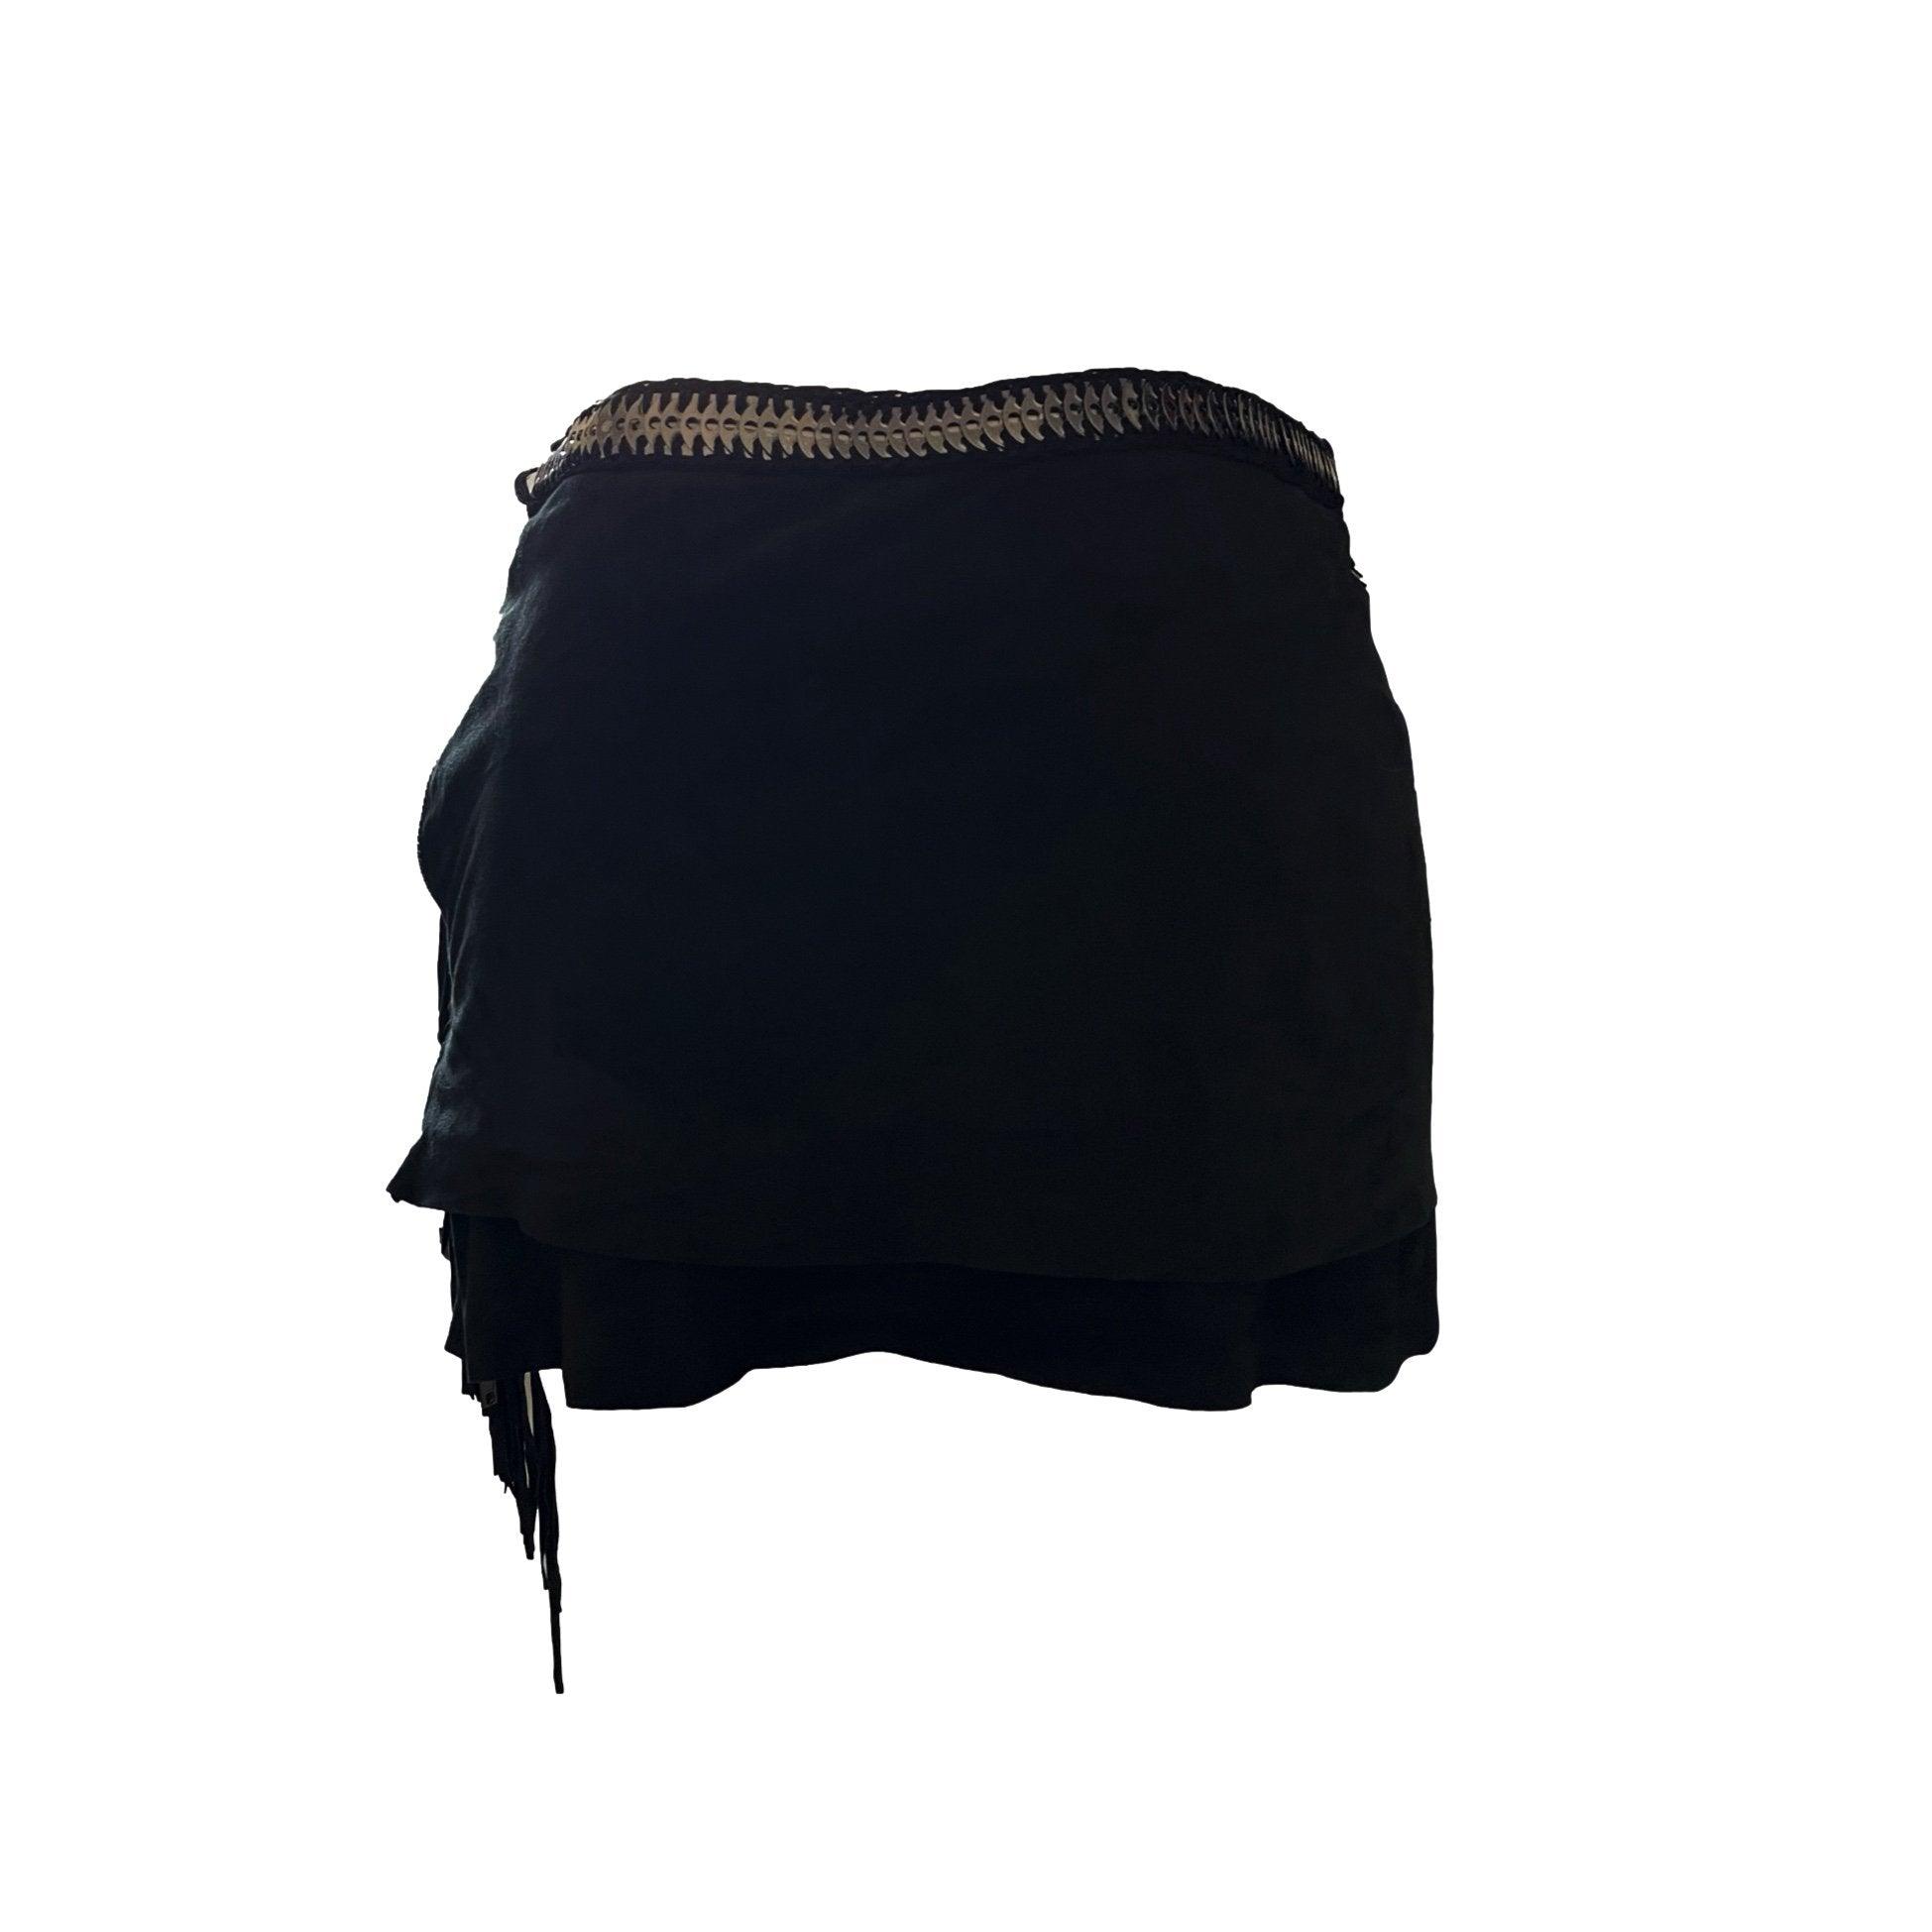 Roberto Cavalli Black Fur/Suede Skirt - Apparel